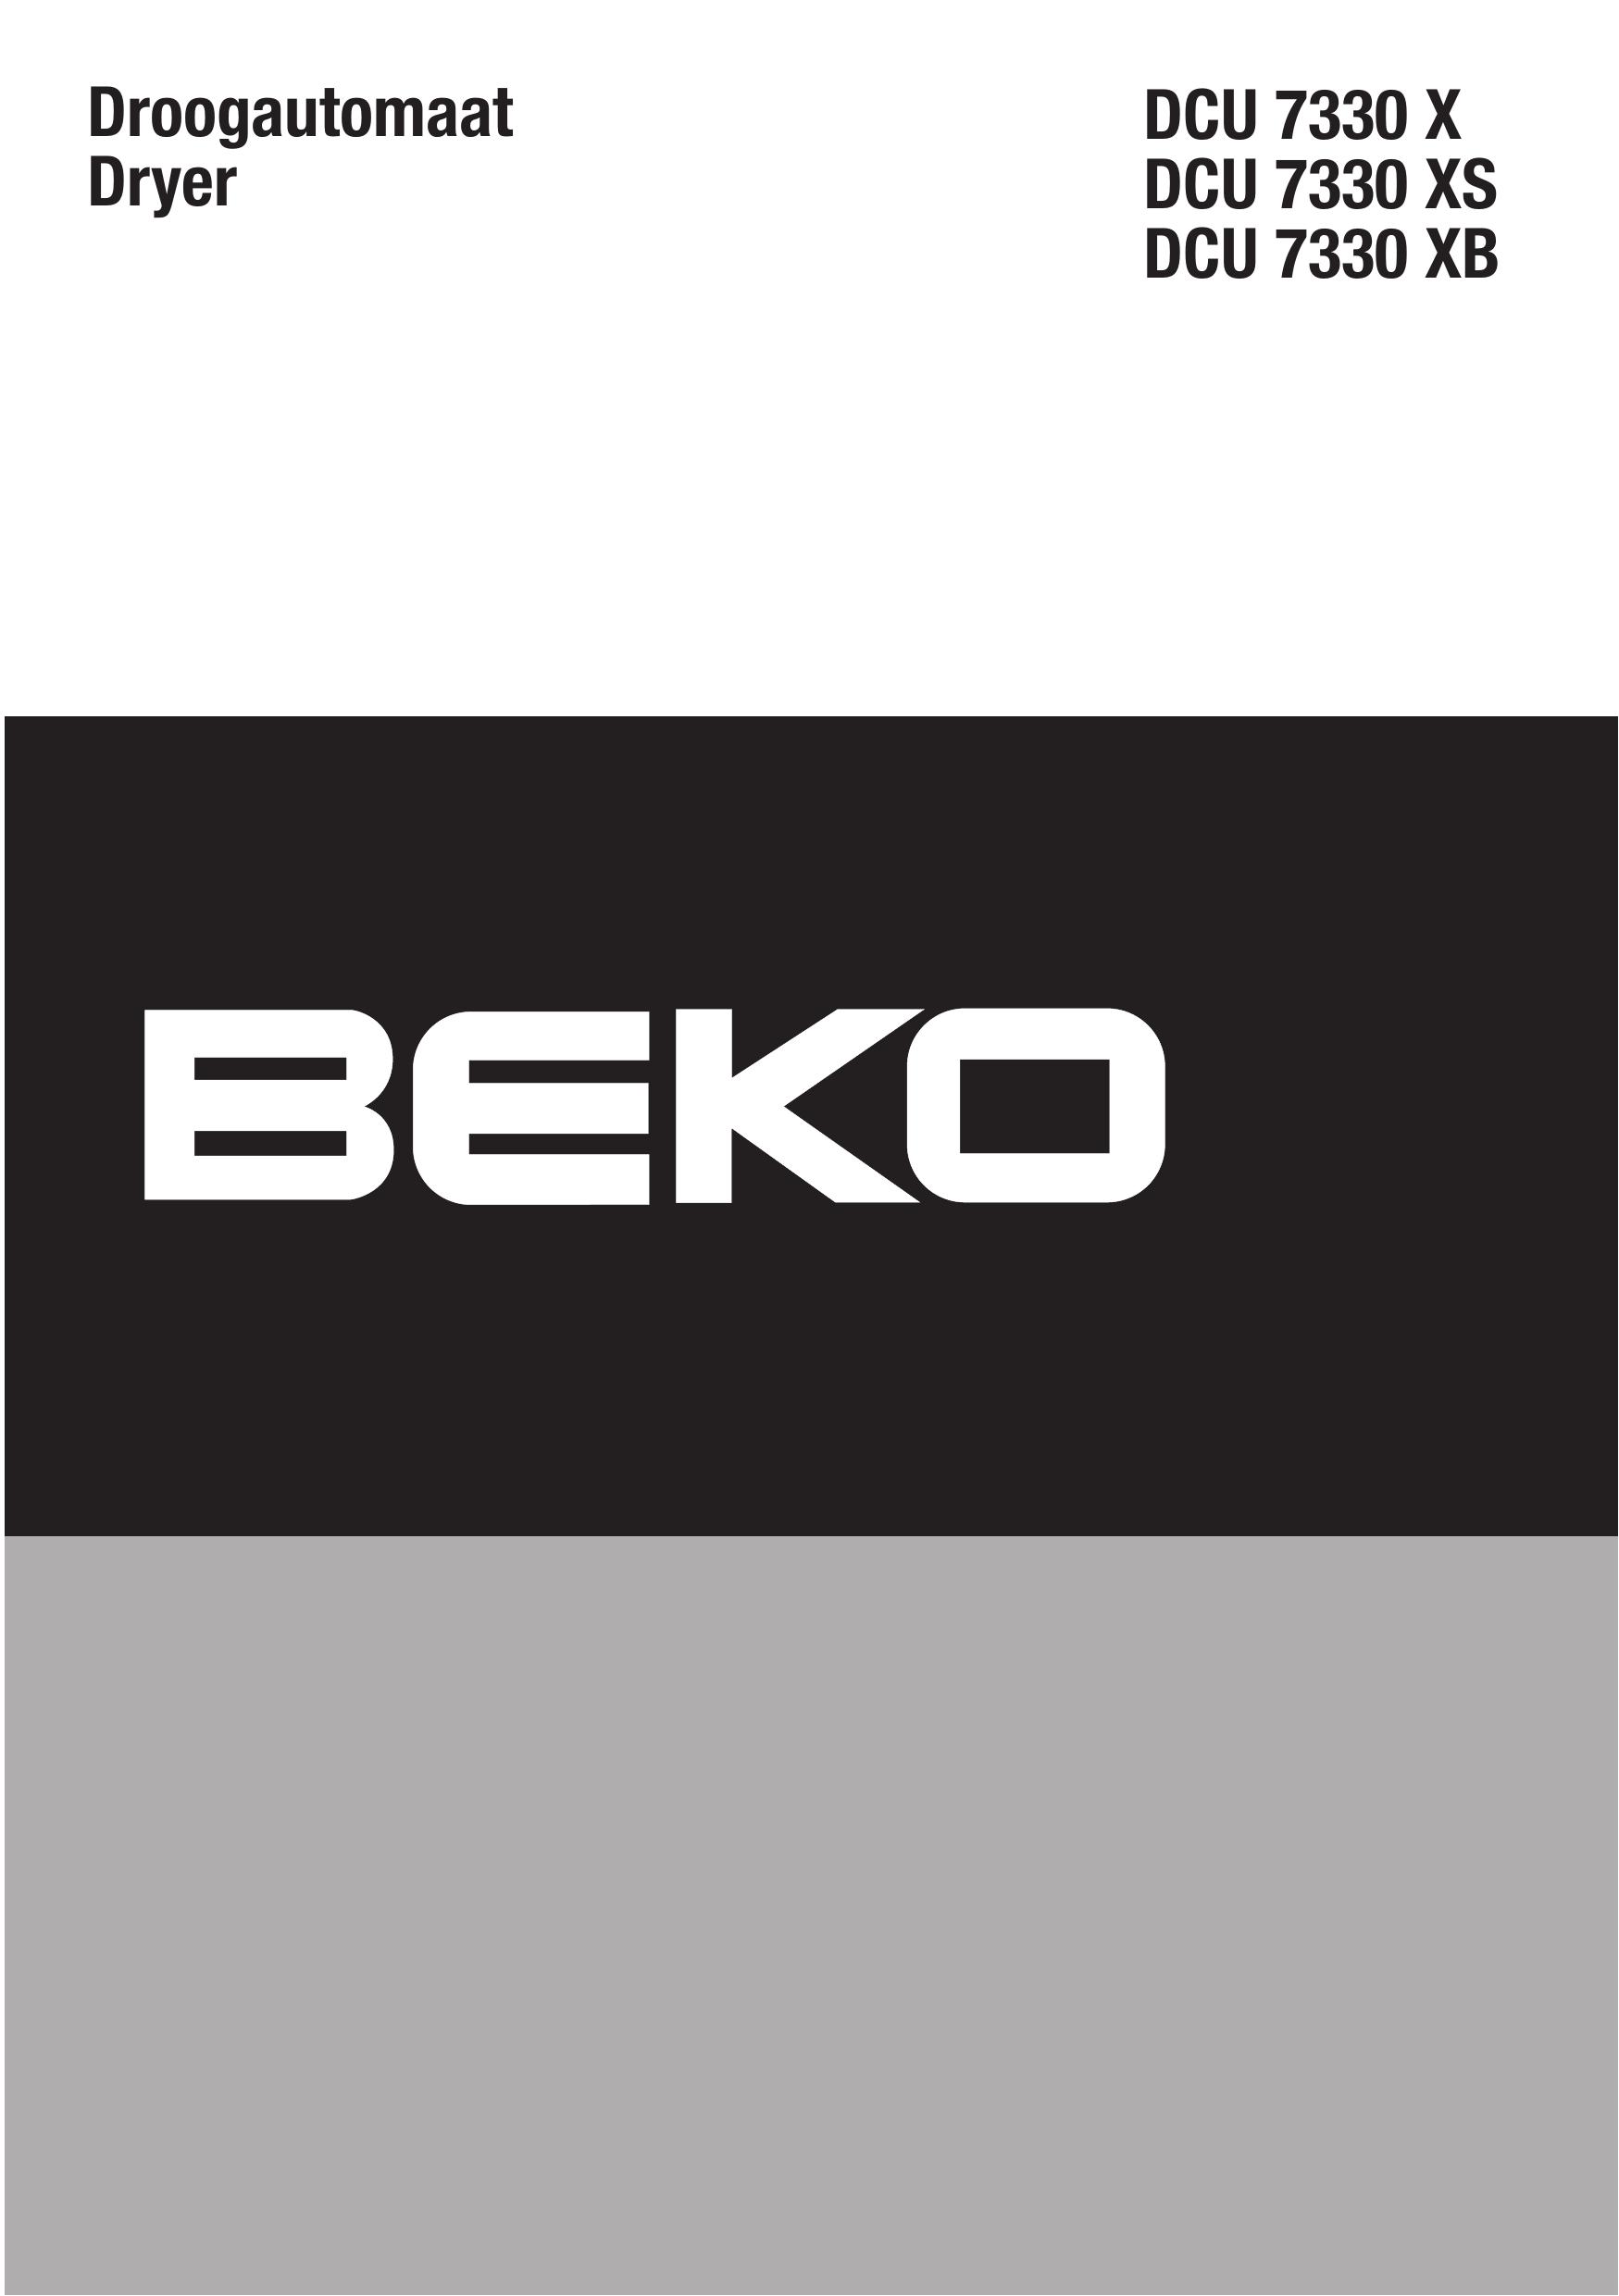 Beko DCU 7330 XB Dryer Accessories User Manual